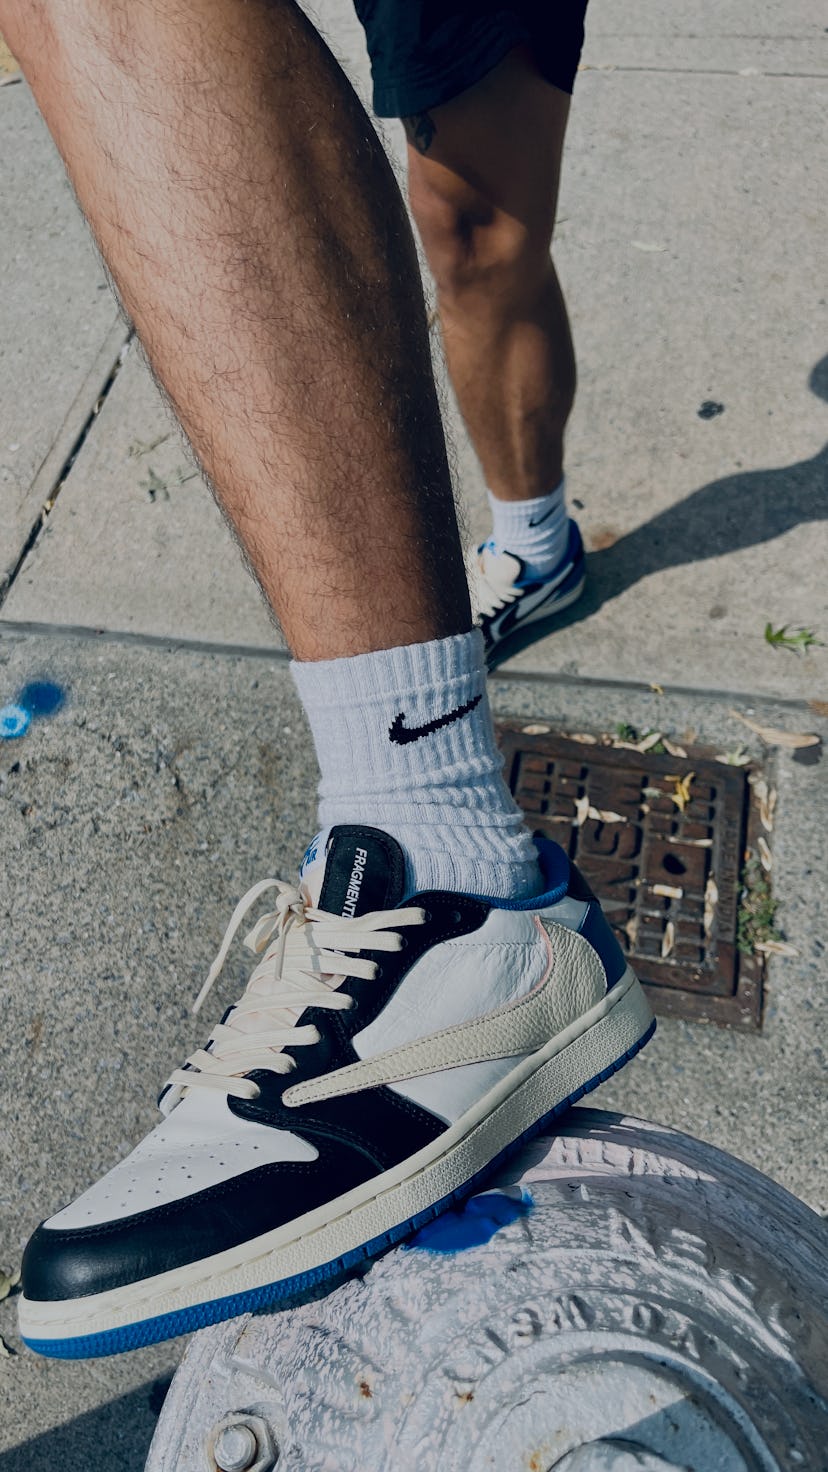 Nike Travis Scott x Fragment Design Air Jordan 1 Low review on feet